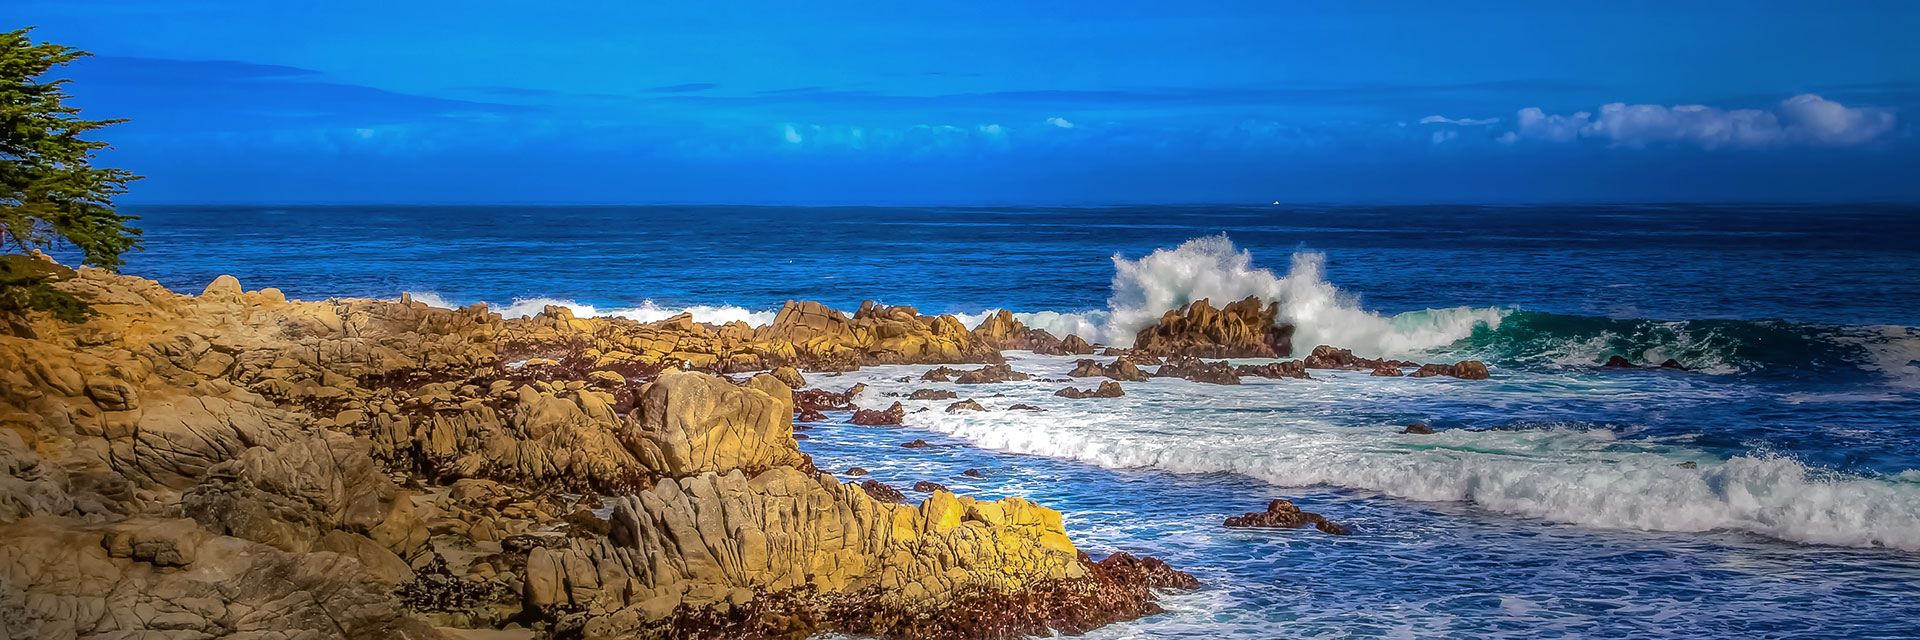 Monterey, California Attractions